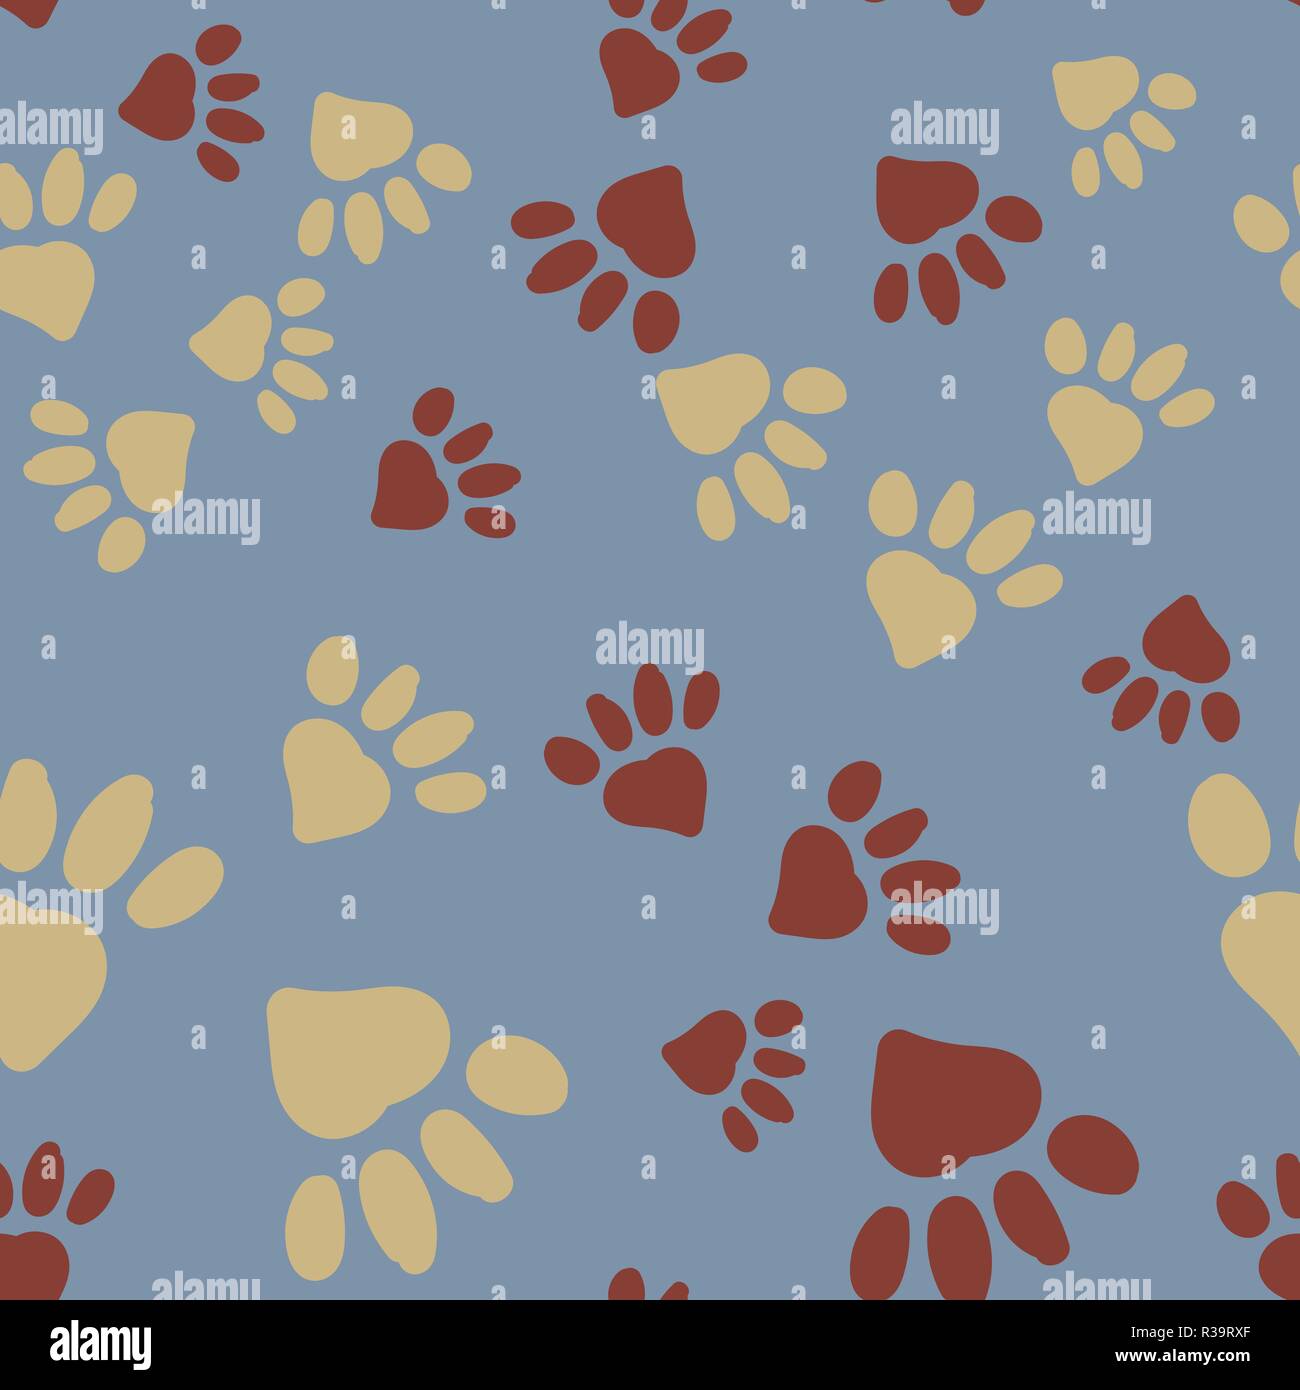 Animal Foot Prints Endless Pateern. Loving Animal Seamless Tile Stock Vector